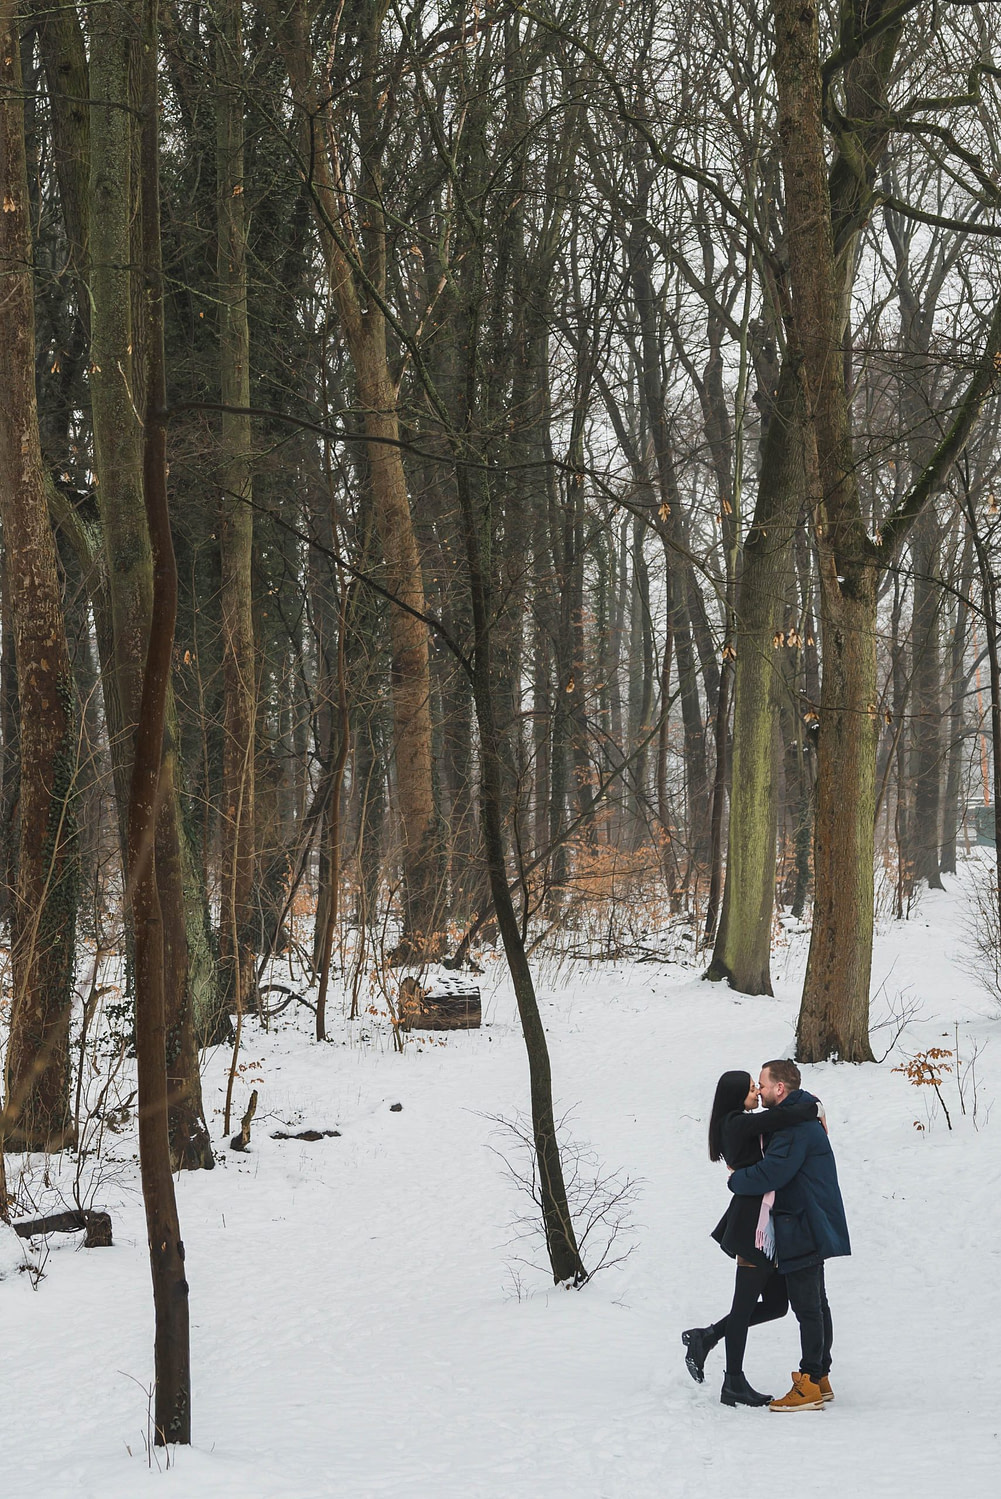 Verlobungsshooting Paarshooting im verschneiten Treptower Park, Berlin. Schnee Fotos. Hochzeitsfotograf Berlin. Hochzeitsfotograf Brandenburg. Hochzeitsreportage Berlin